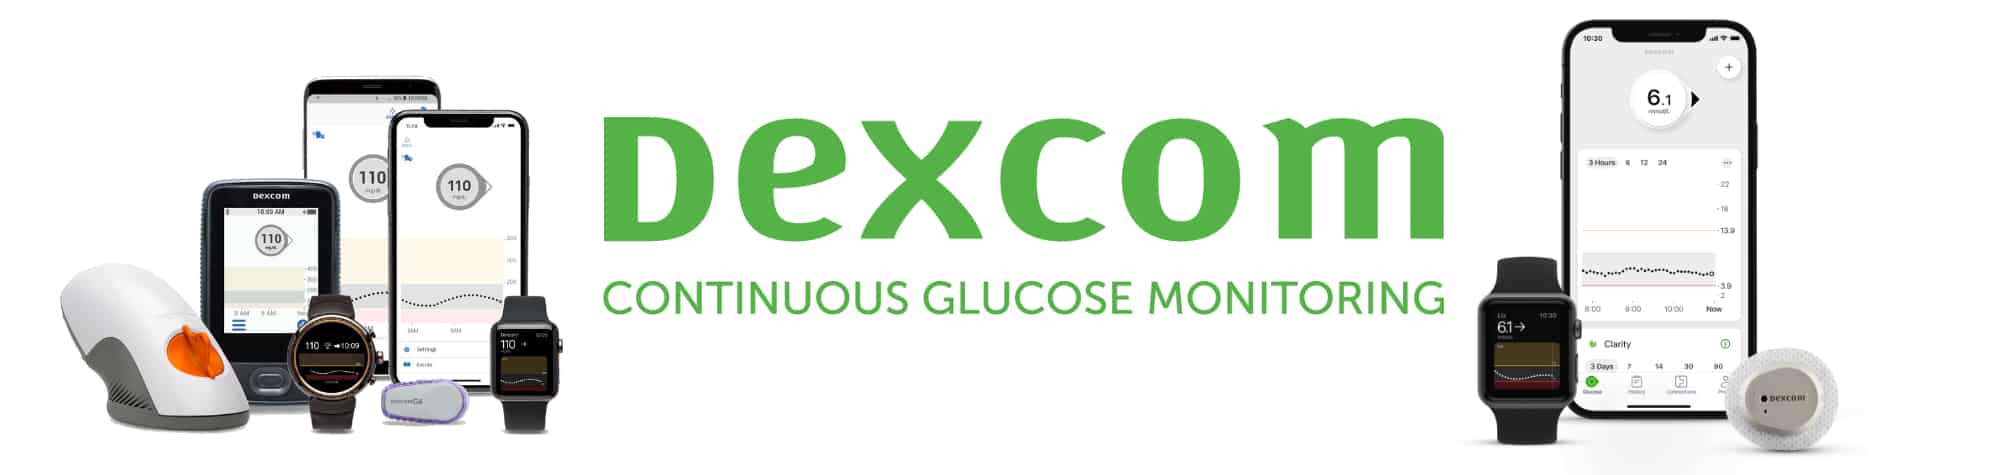 dexcom banner 3| My Language Connection